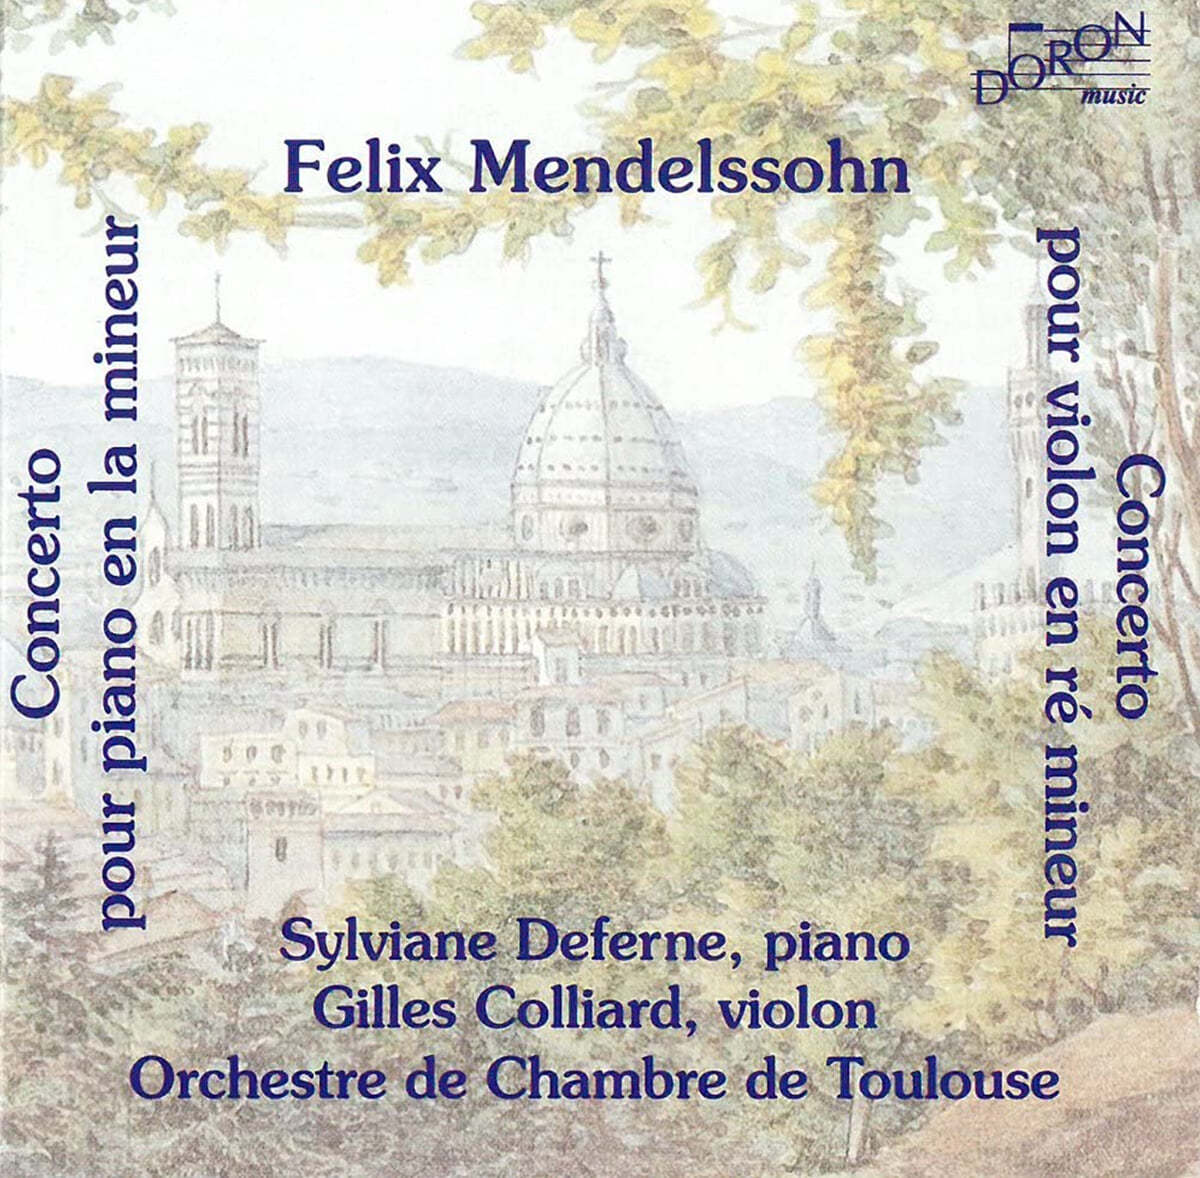 Sylviane Deferne / Gilles Colliard 멘델스존: 피아노 협주곡 A단조, 바이올린 협주곡 D단조 (Mendelssohn: Piano Concerto MWV02, Violin Concerto MWV04) 